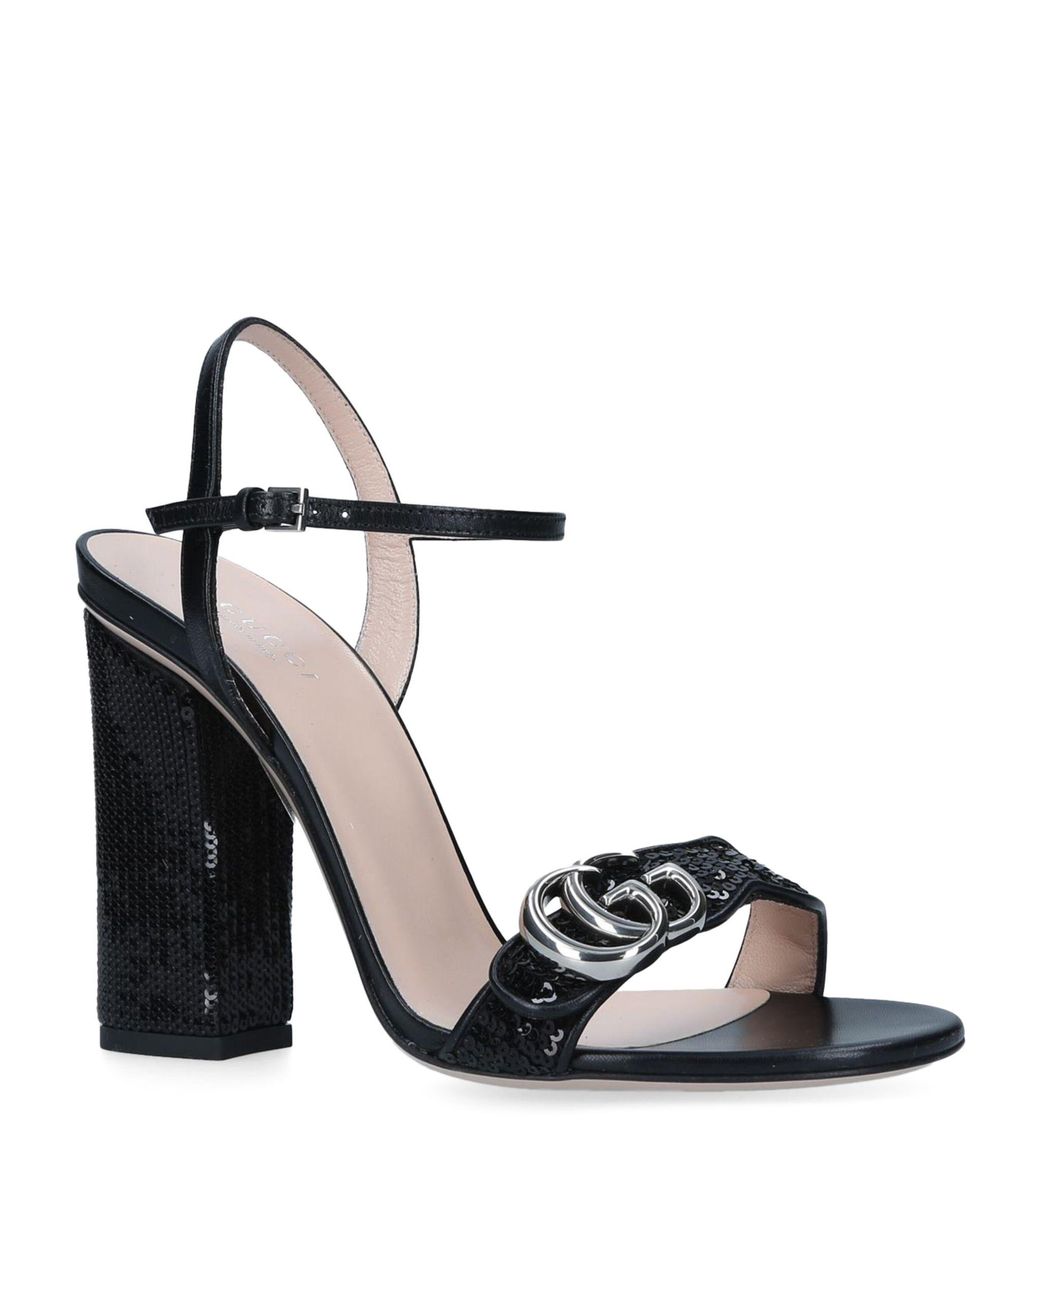 Gucci Sequin Sandals 105 in Black | Lyst